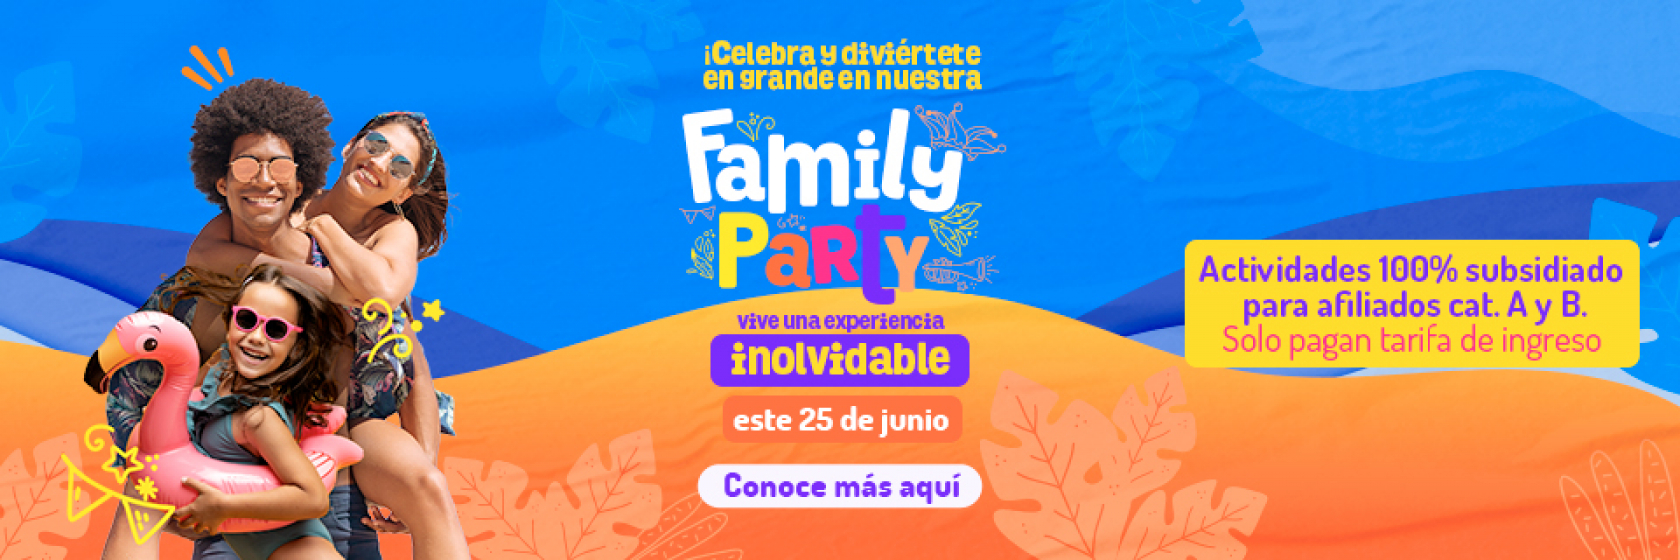 FAMILI PARTY